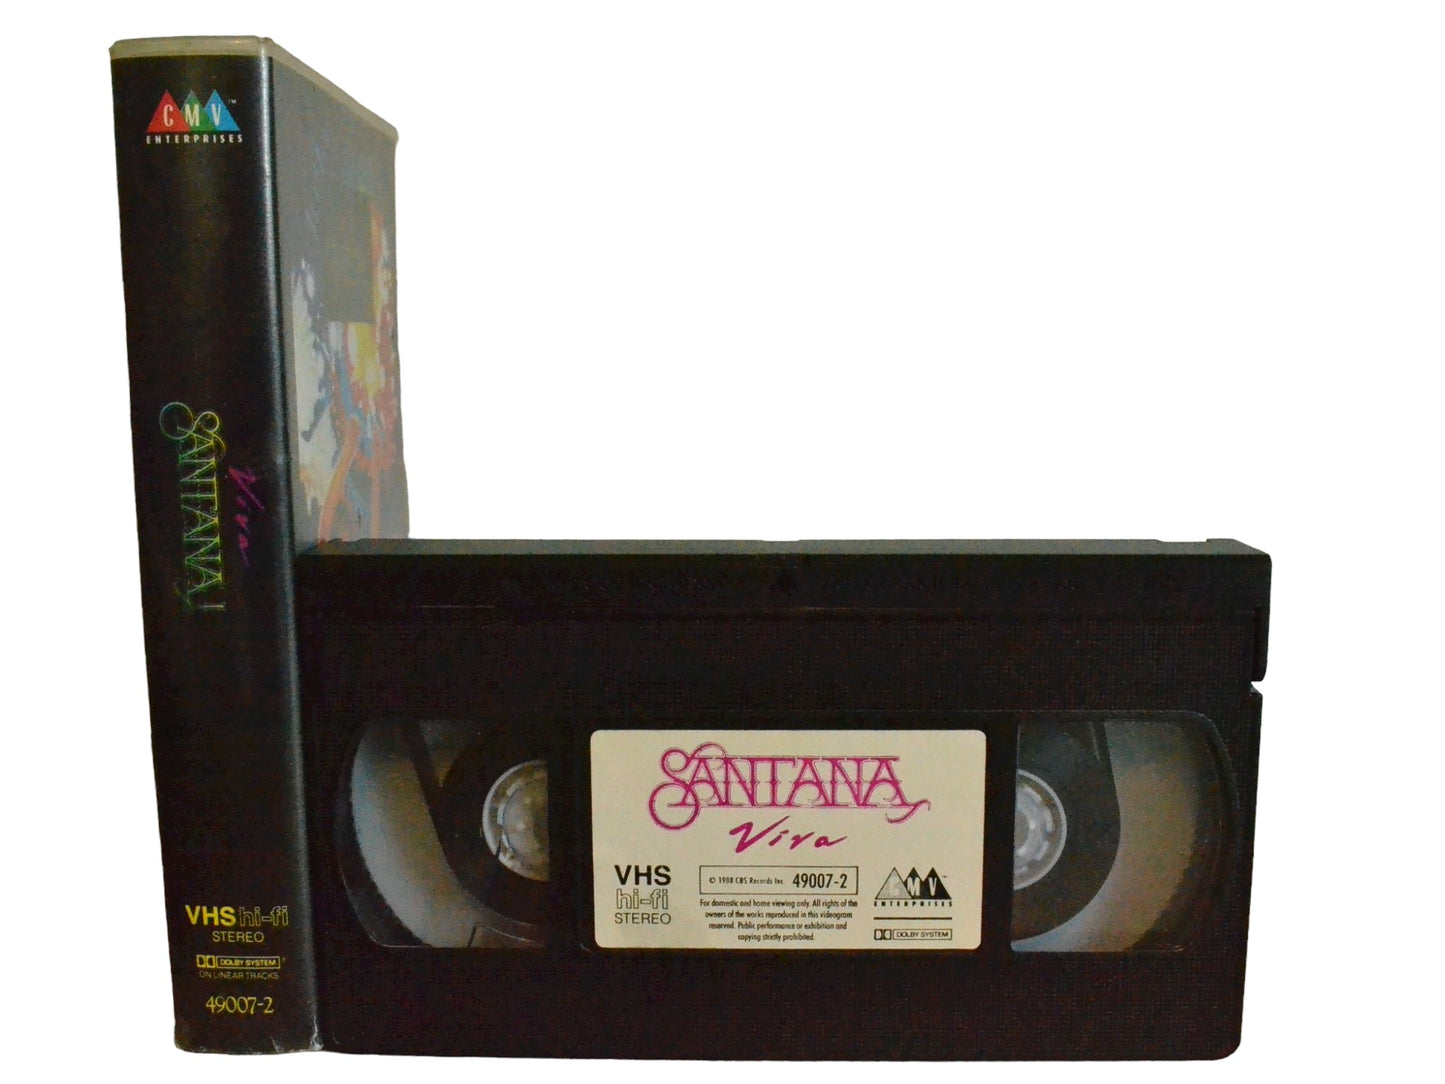 Santana Viva - Luan Santana - CMV Enterprises - Music - PAL - VHS-